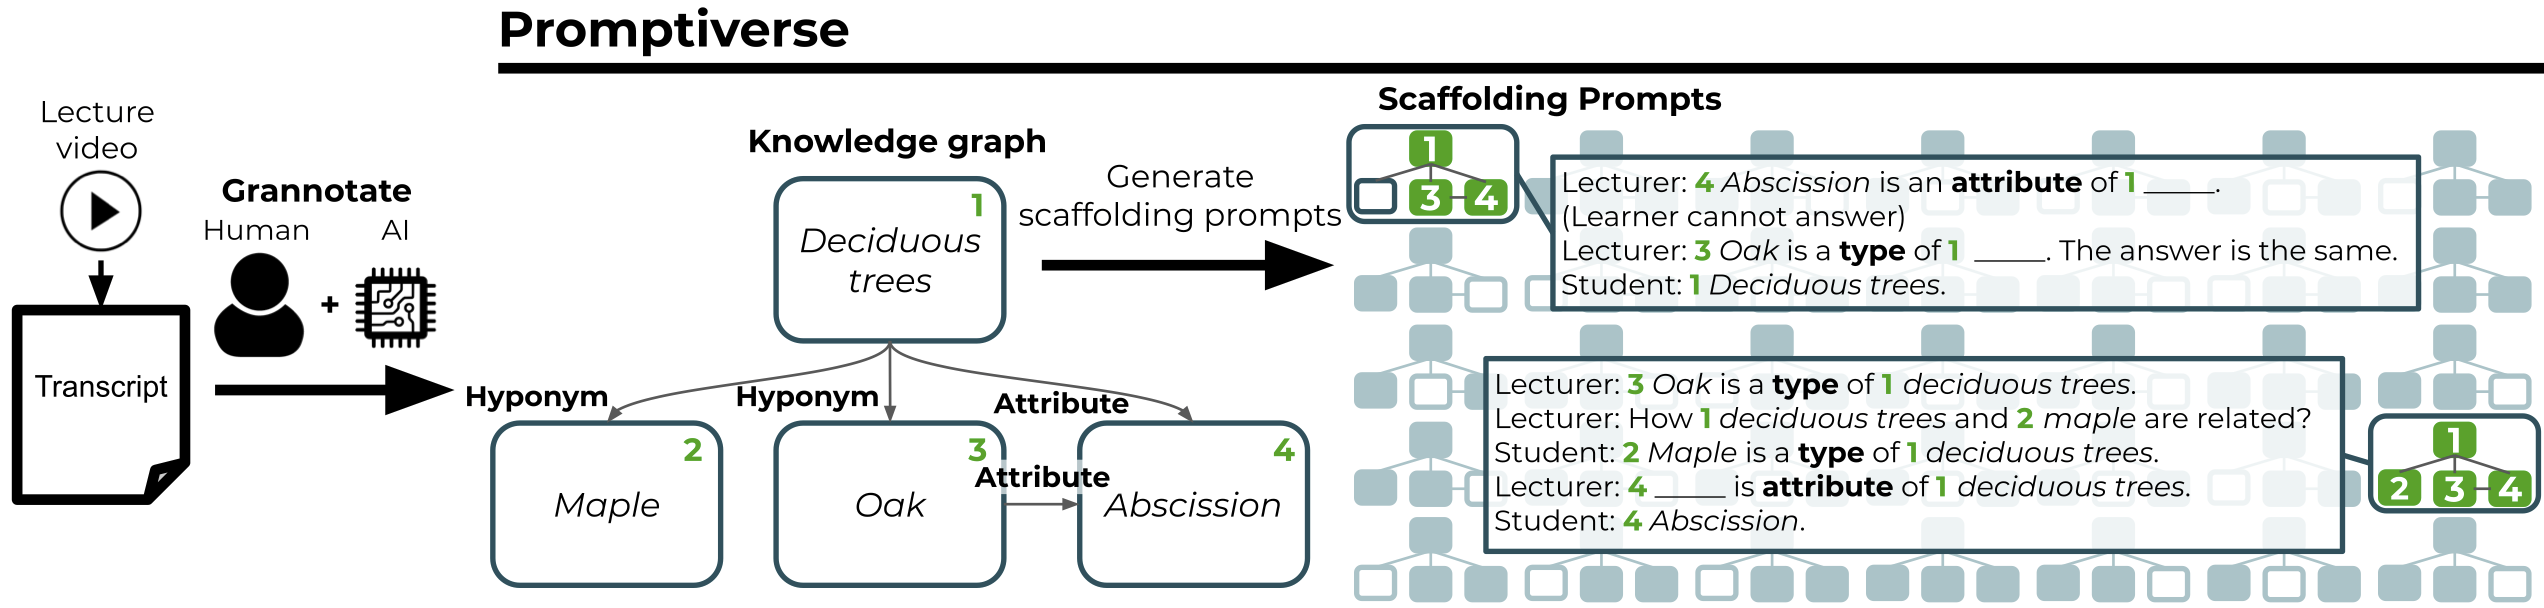 Four components: Lecture video, Transcript, Knowledge graph, Scaffolding Prompts